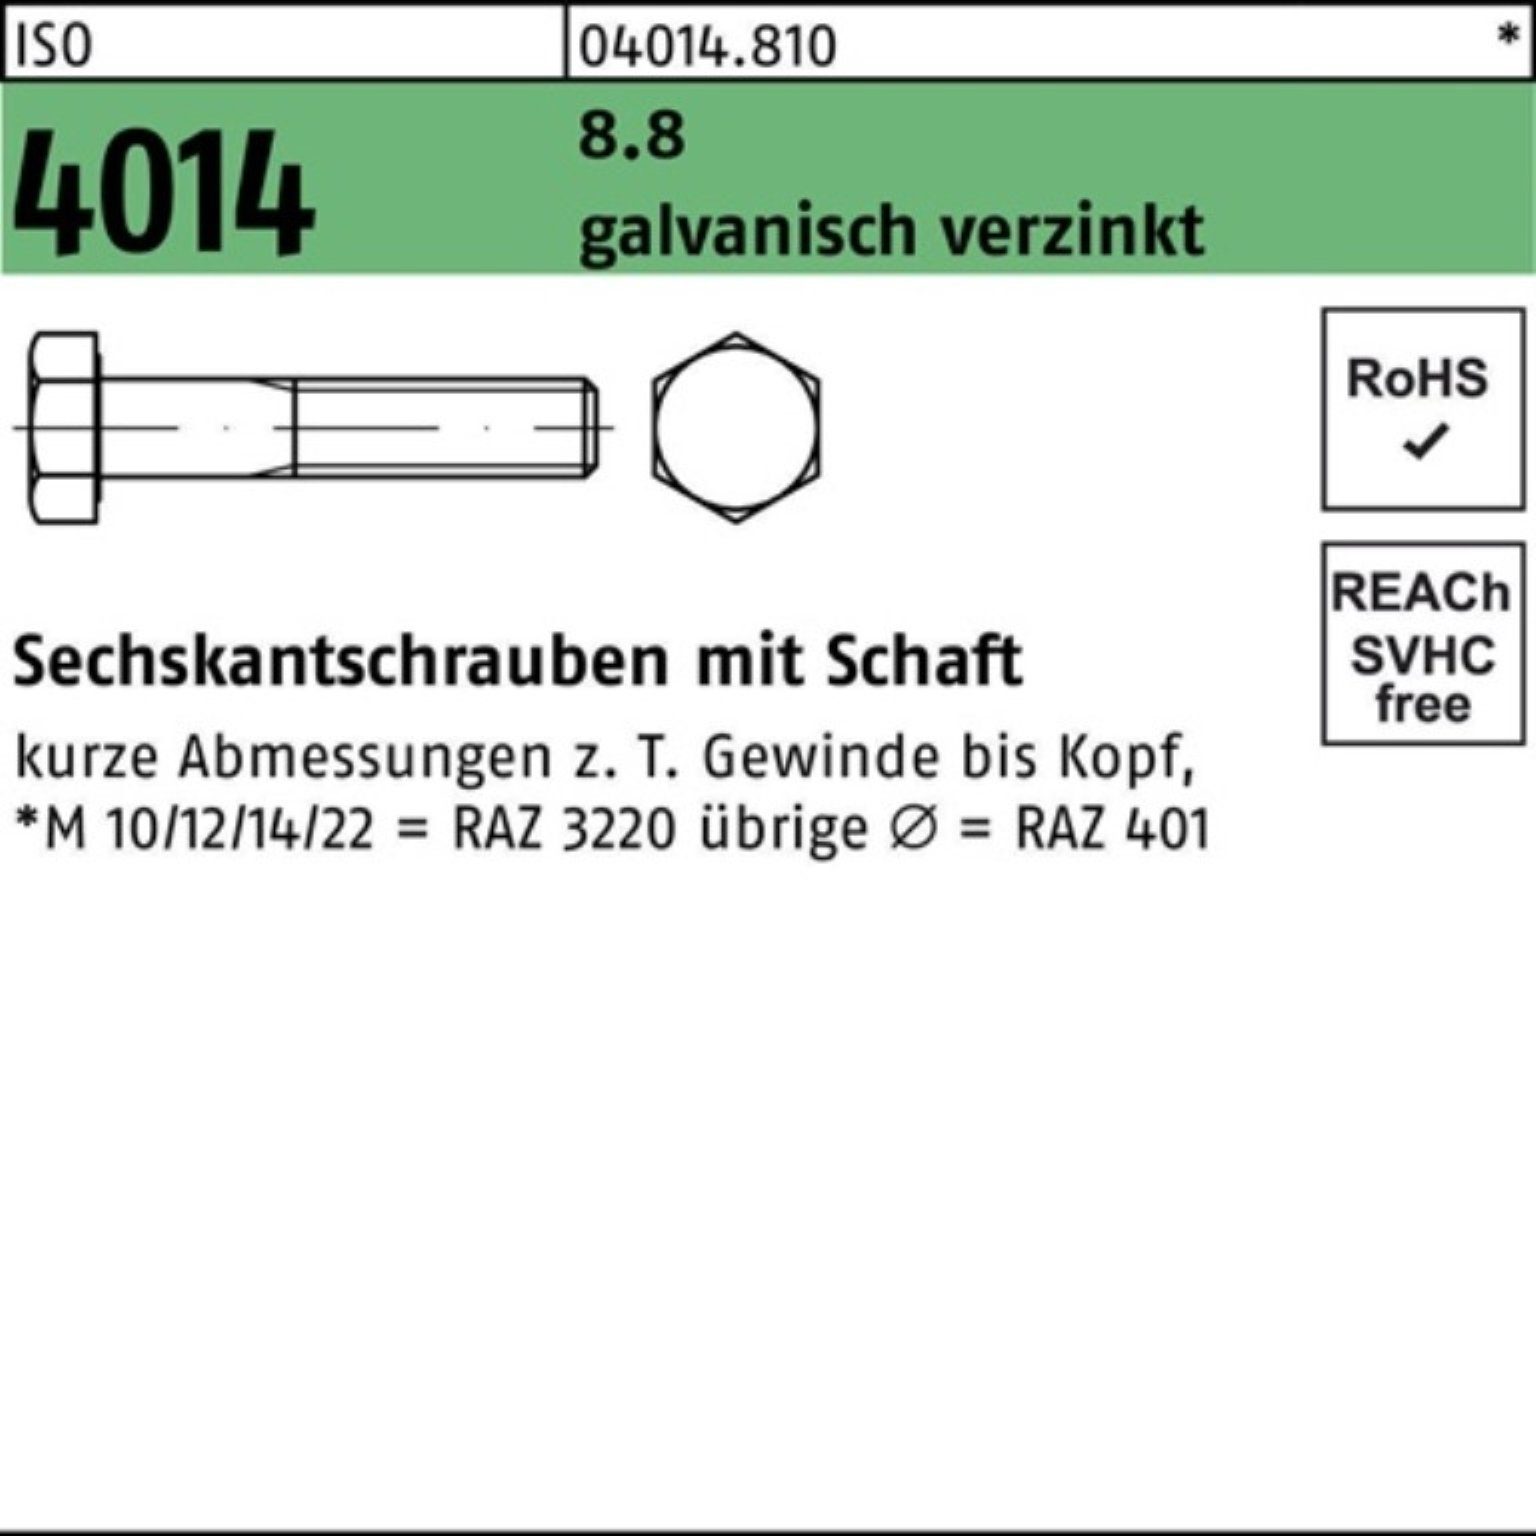 Bufab Sechskantschraube 100er Pack Sechskantschraube ISO 4014 Schaft M10x 130 8.8 galv.verz. 5 | Schrauben